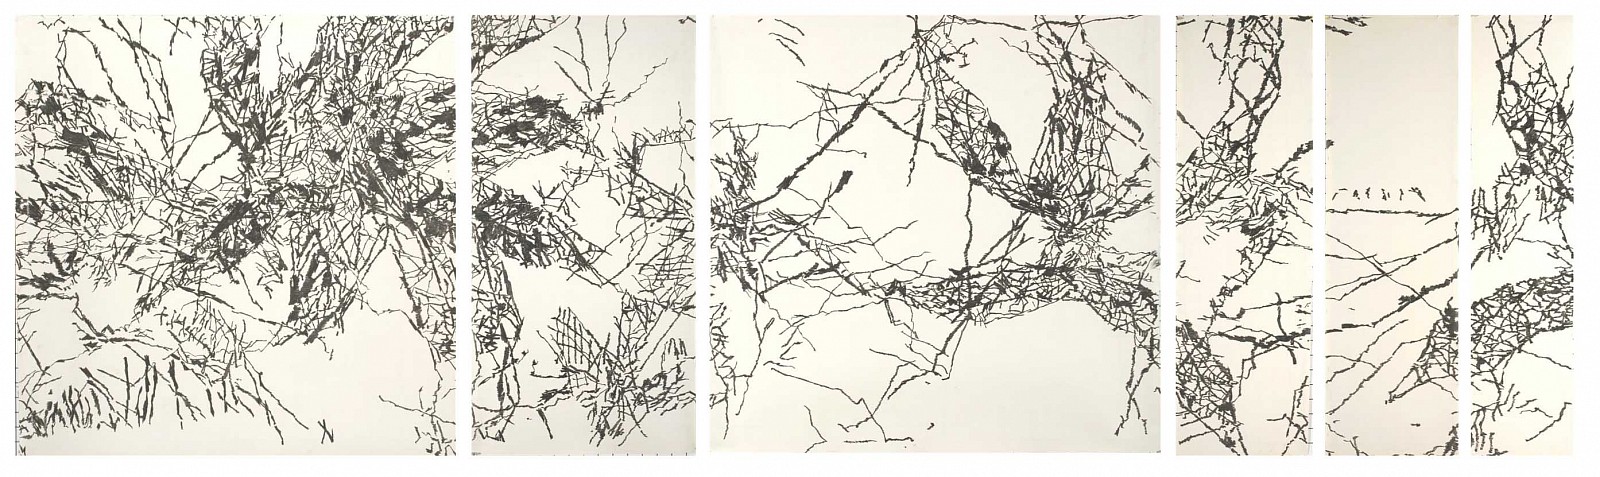 Daniella Sheinman, Untitled
2012, Graphite on paper